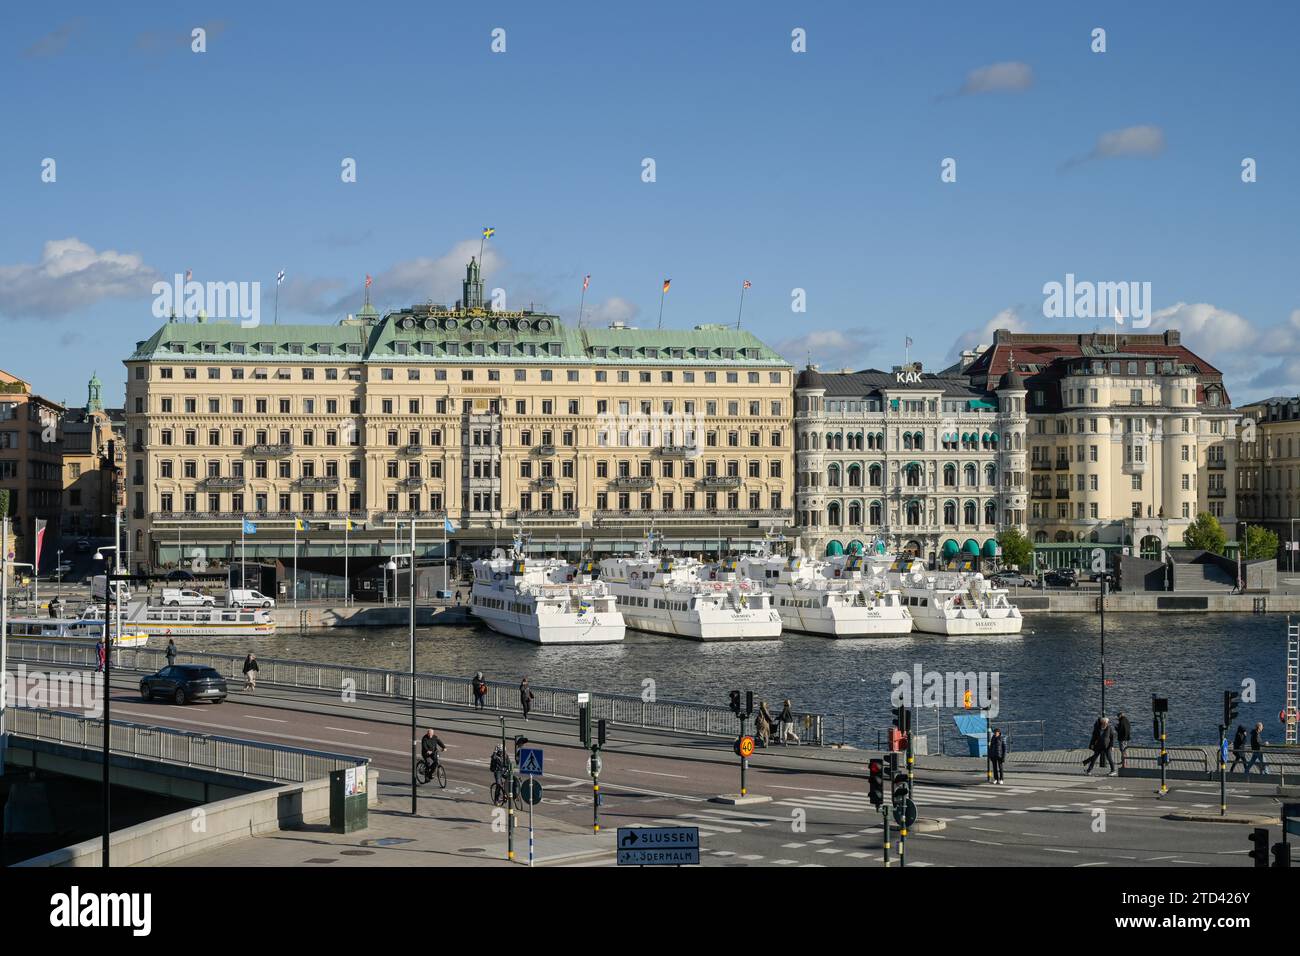 Grand Hotel, Bolinderska palatset, Soedra Blasieholmshamnen, Norrstroem, Svezia, Stoccolma, Svezia Foto Stock